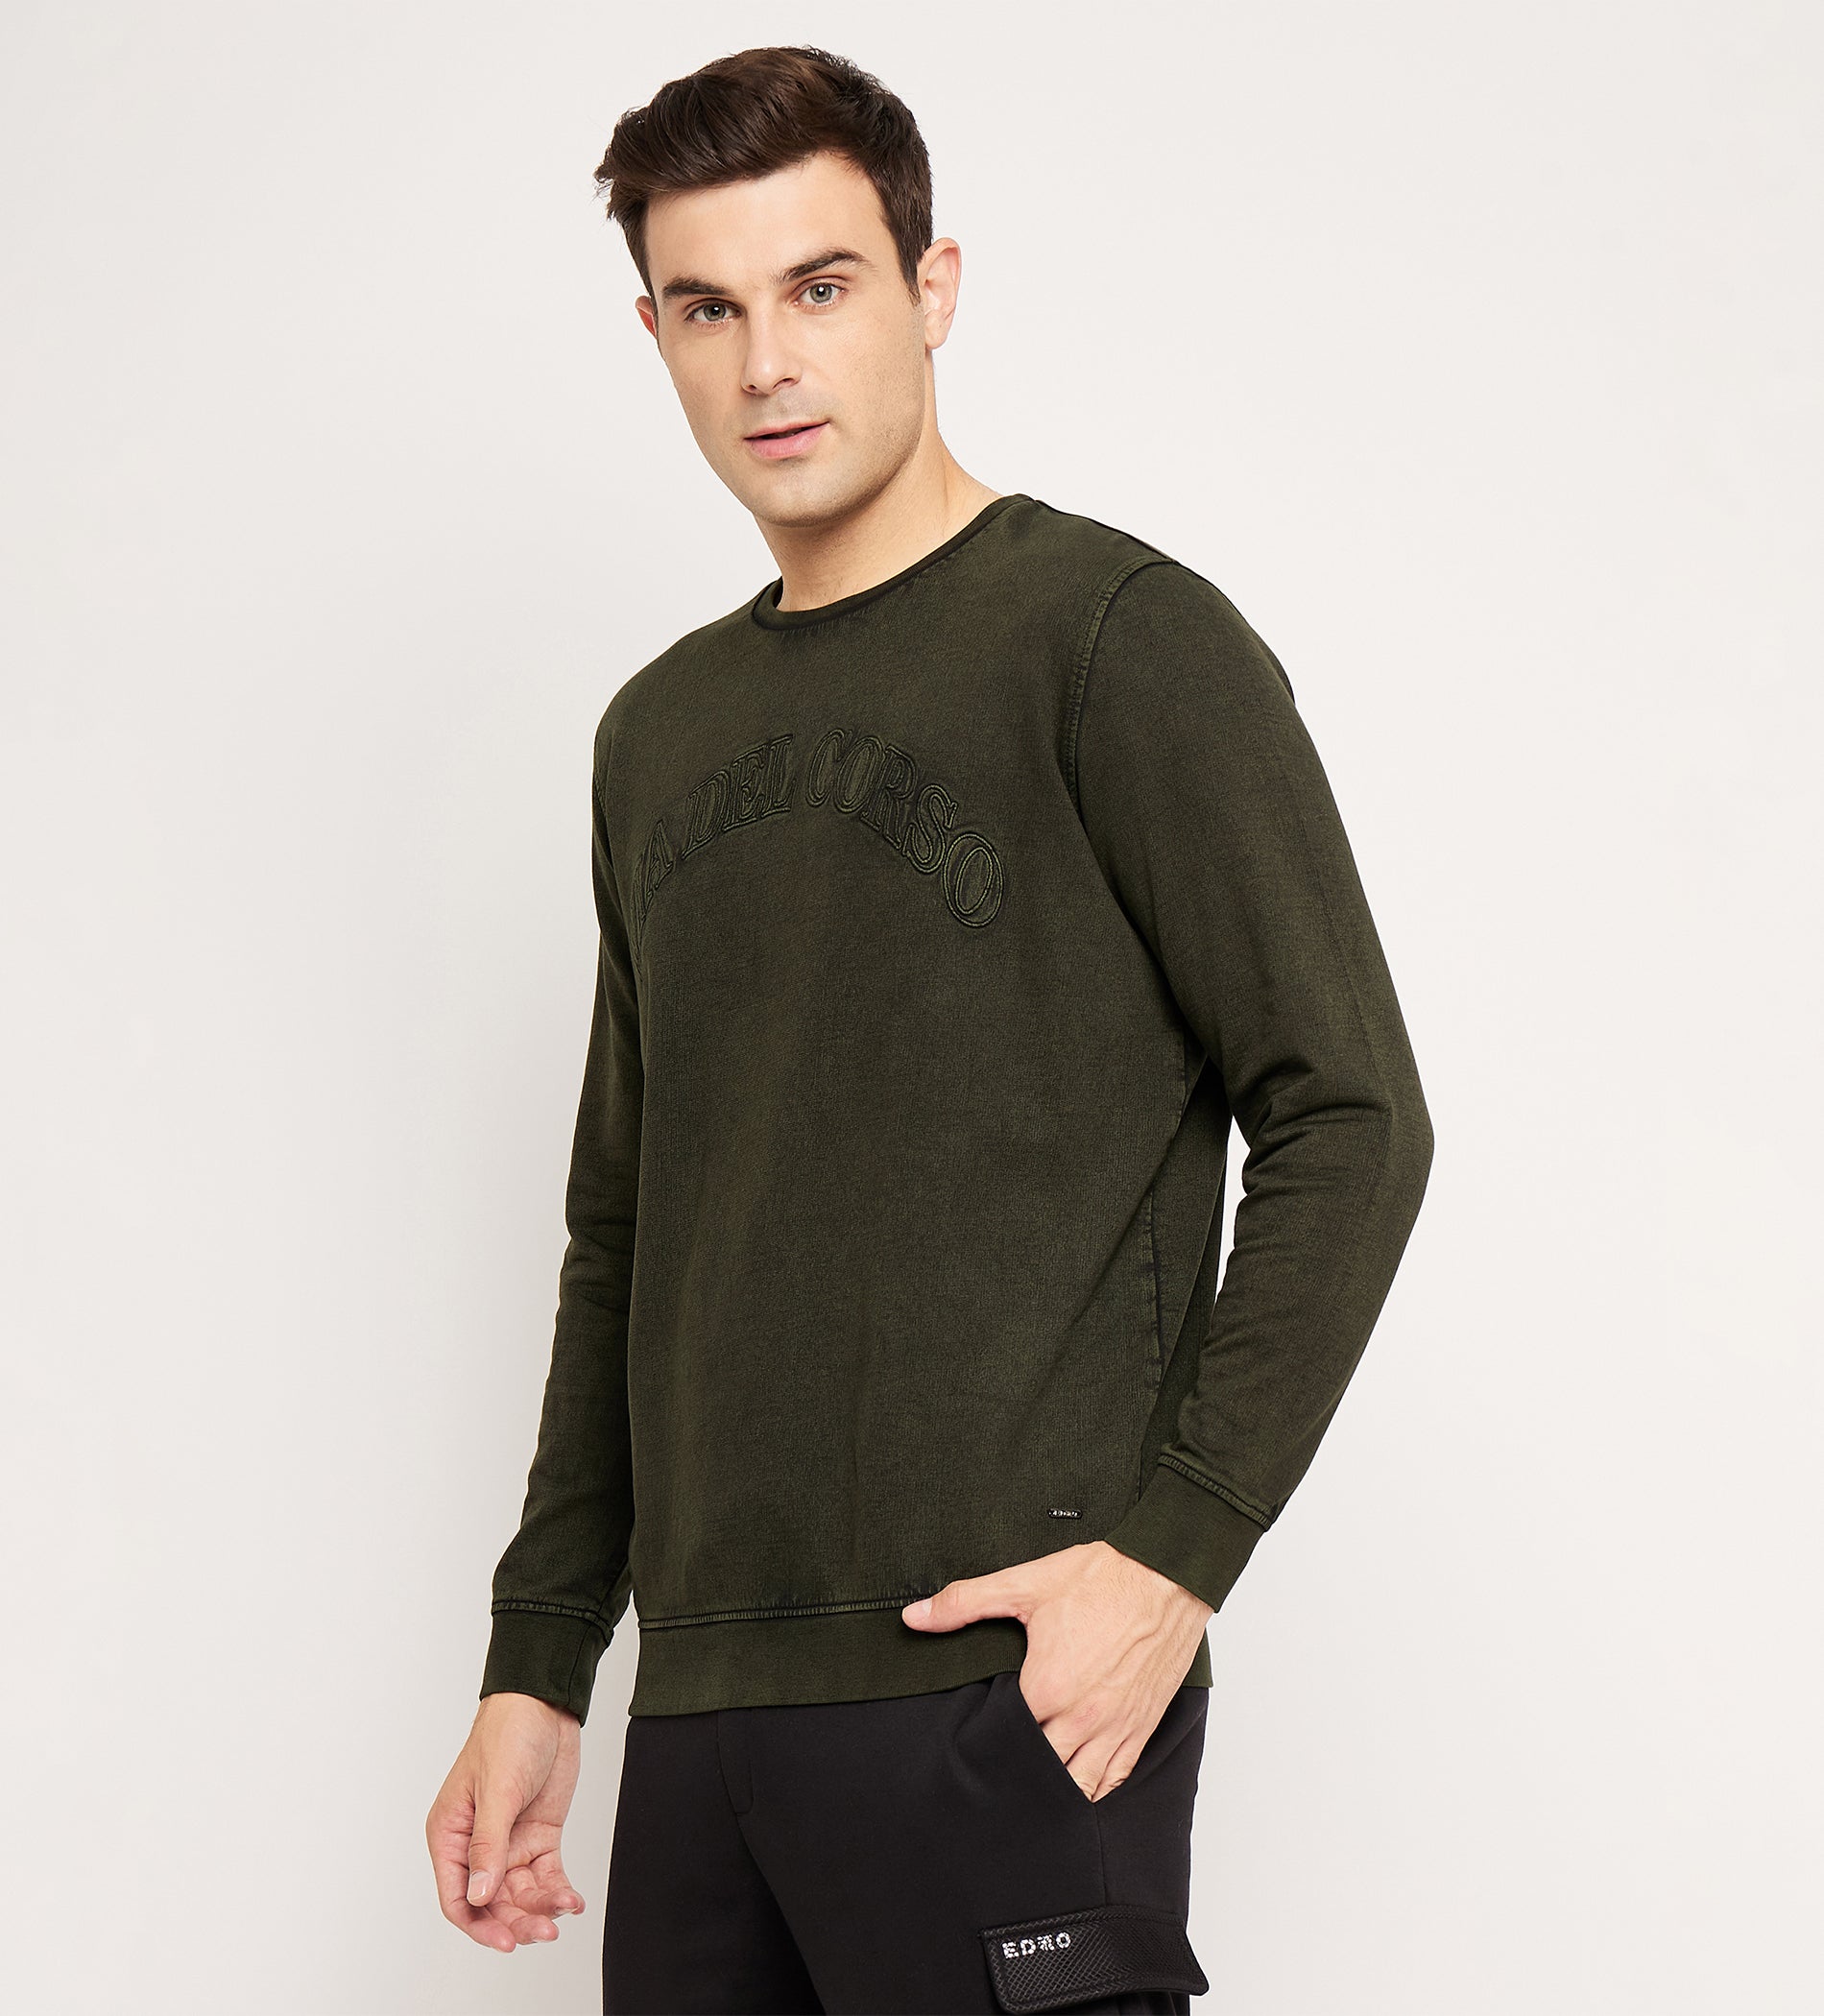 Retro Olive Embroidery Sweatshirt in Acid-Wash